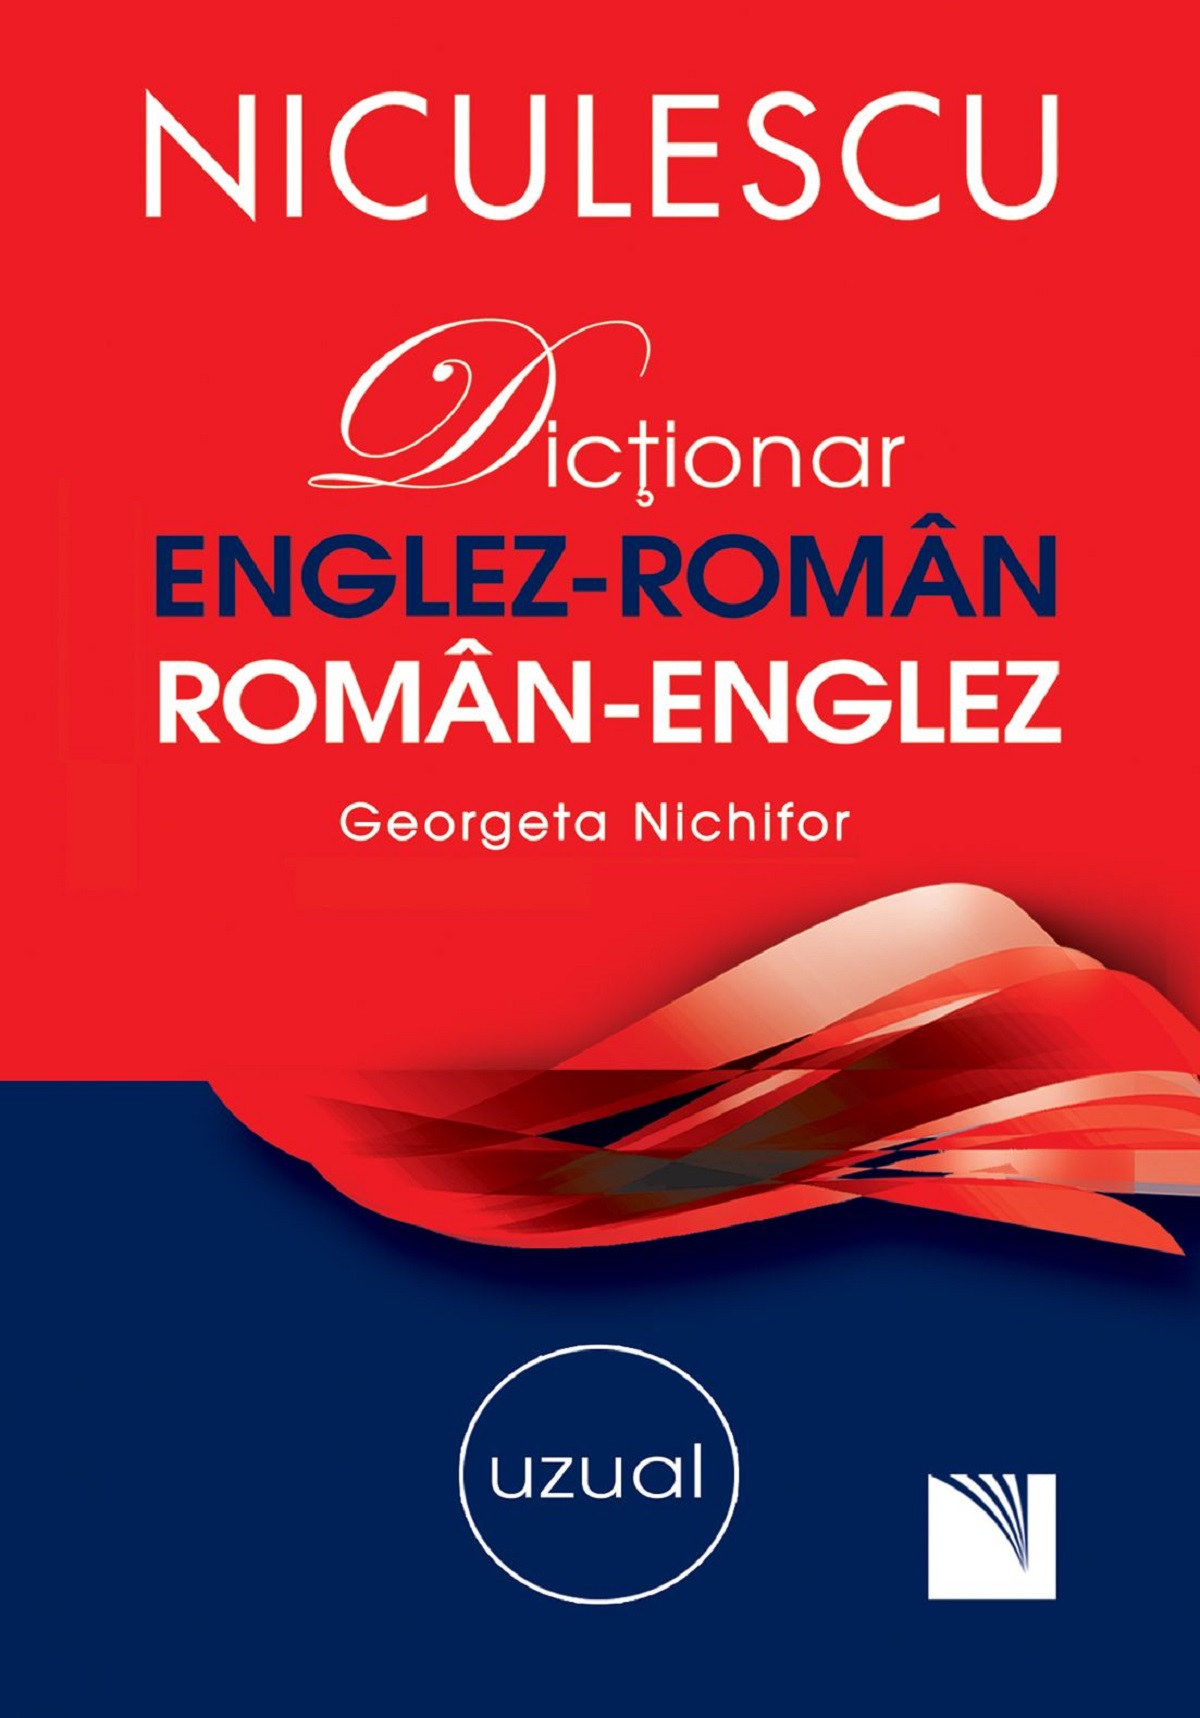 Dictionar uzual englez-roman, roman-englez - Georgeta Nichifor